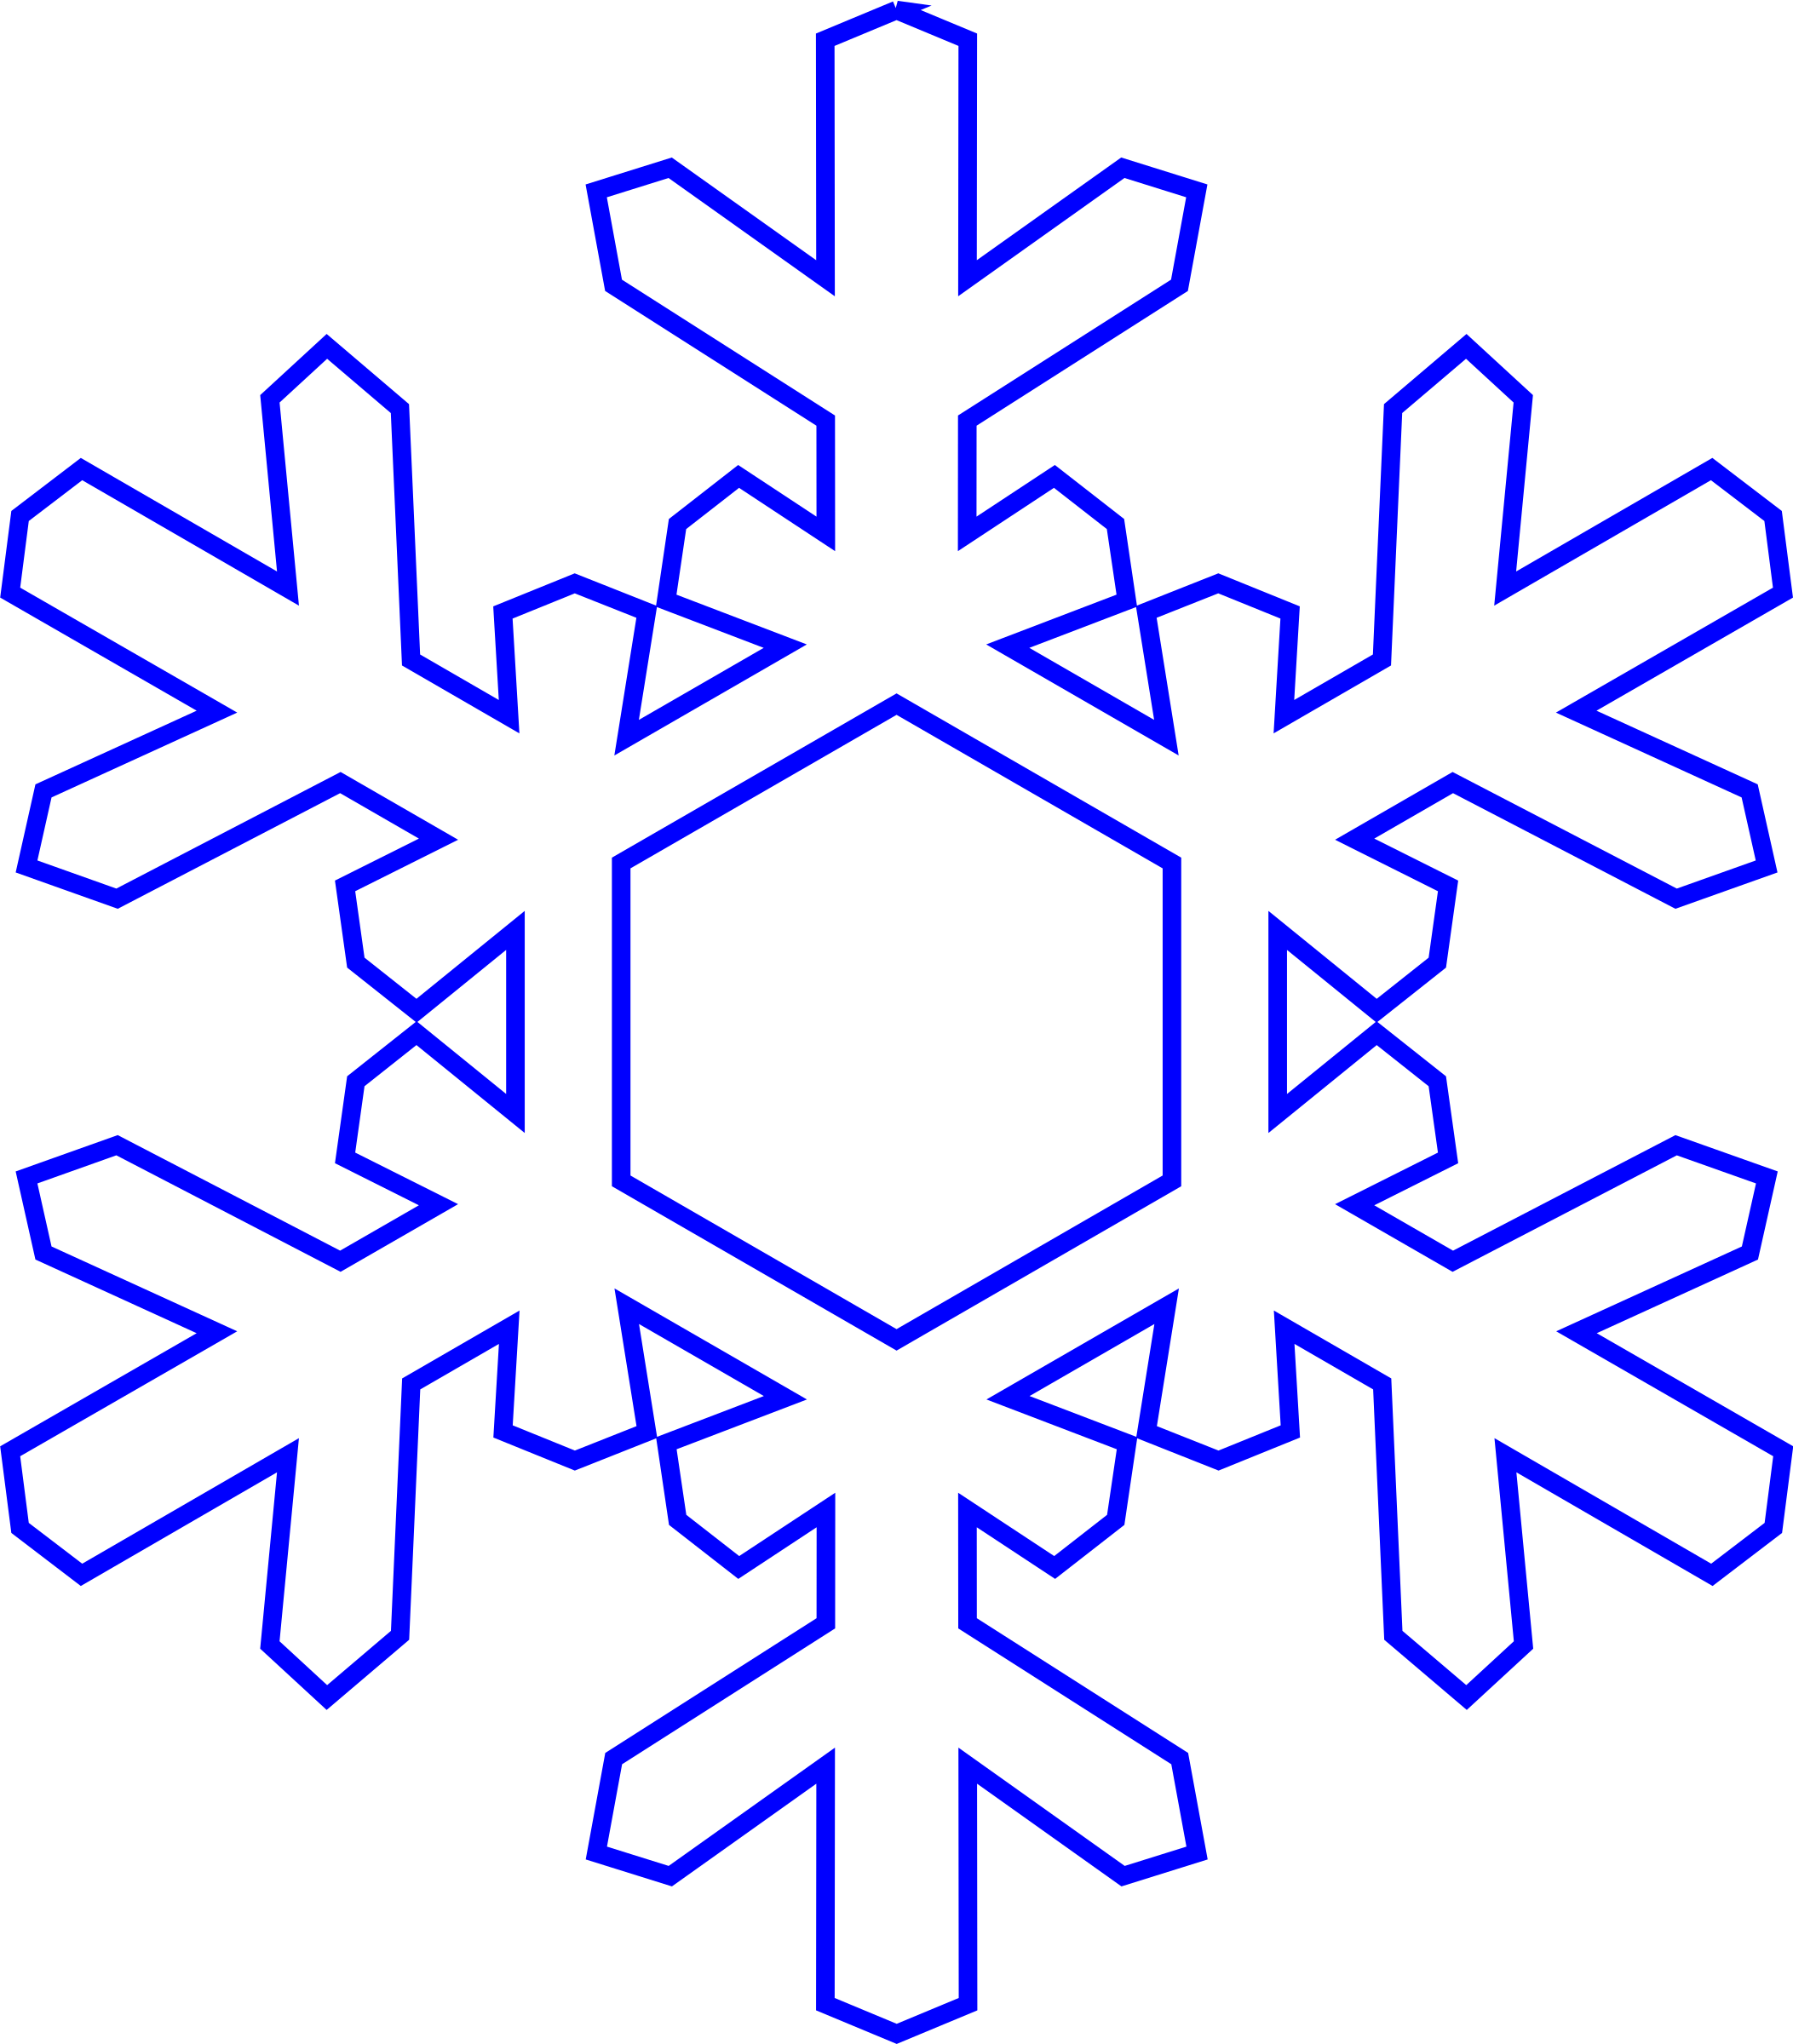 Snowflake Clipart Images - ClipArt Best